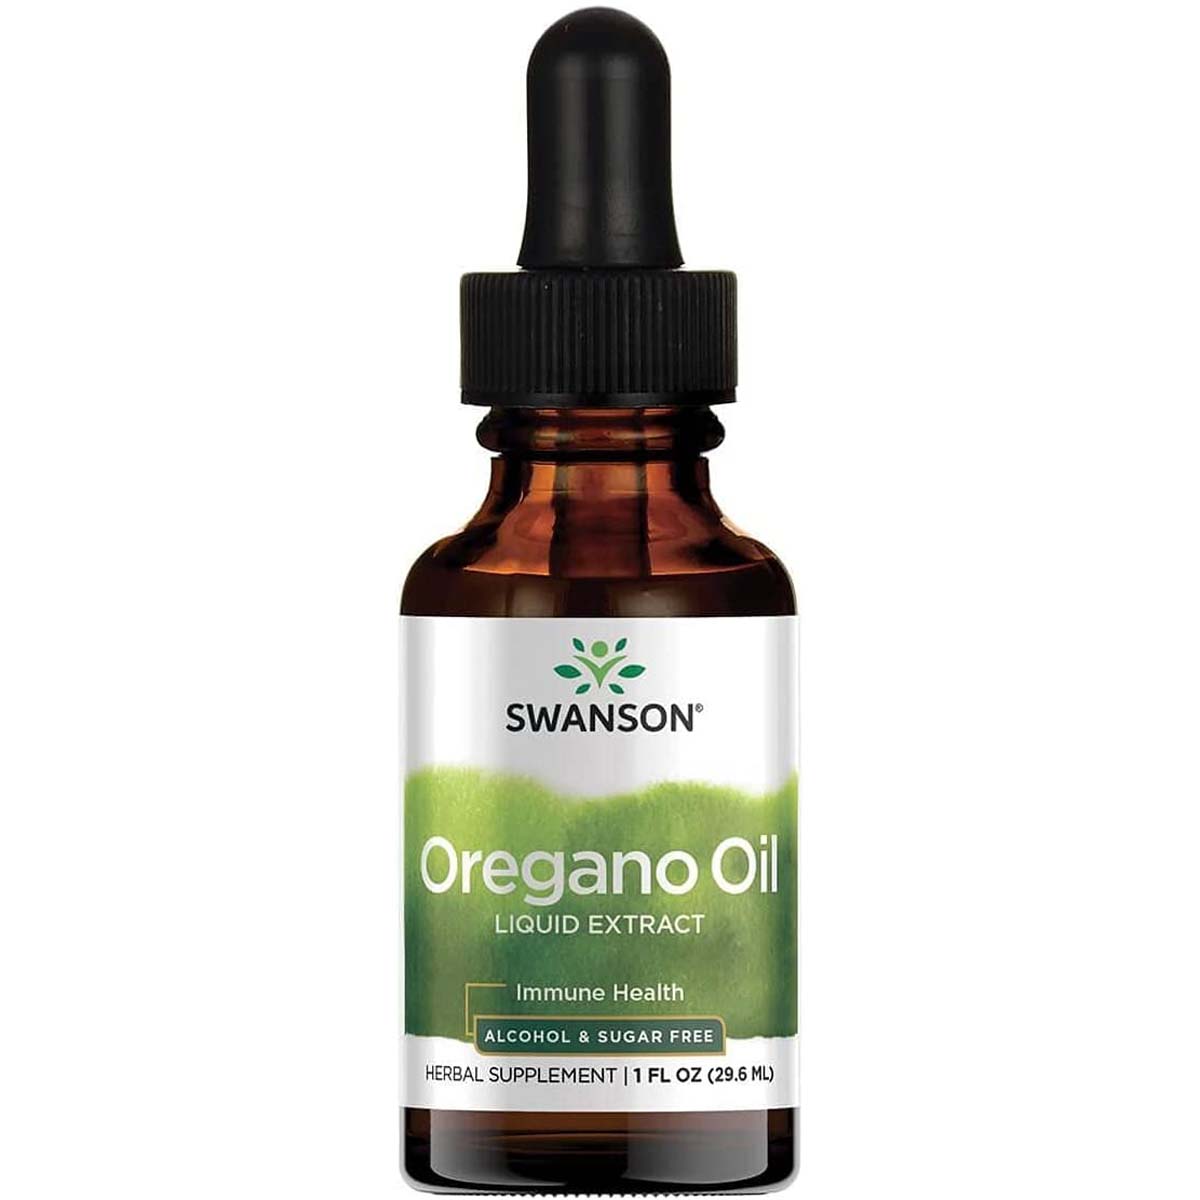 Swanson Oil of Oregano Liquid Extract 29.6 ML